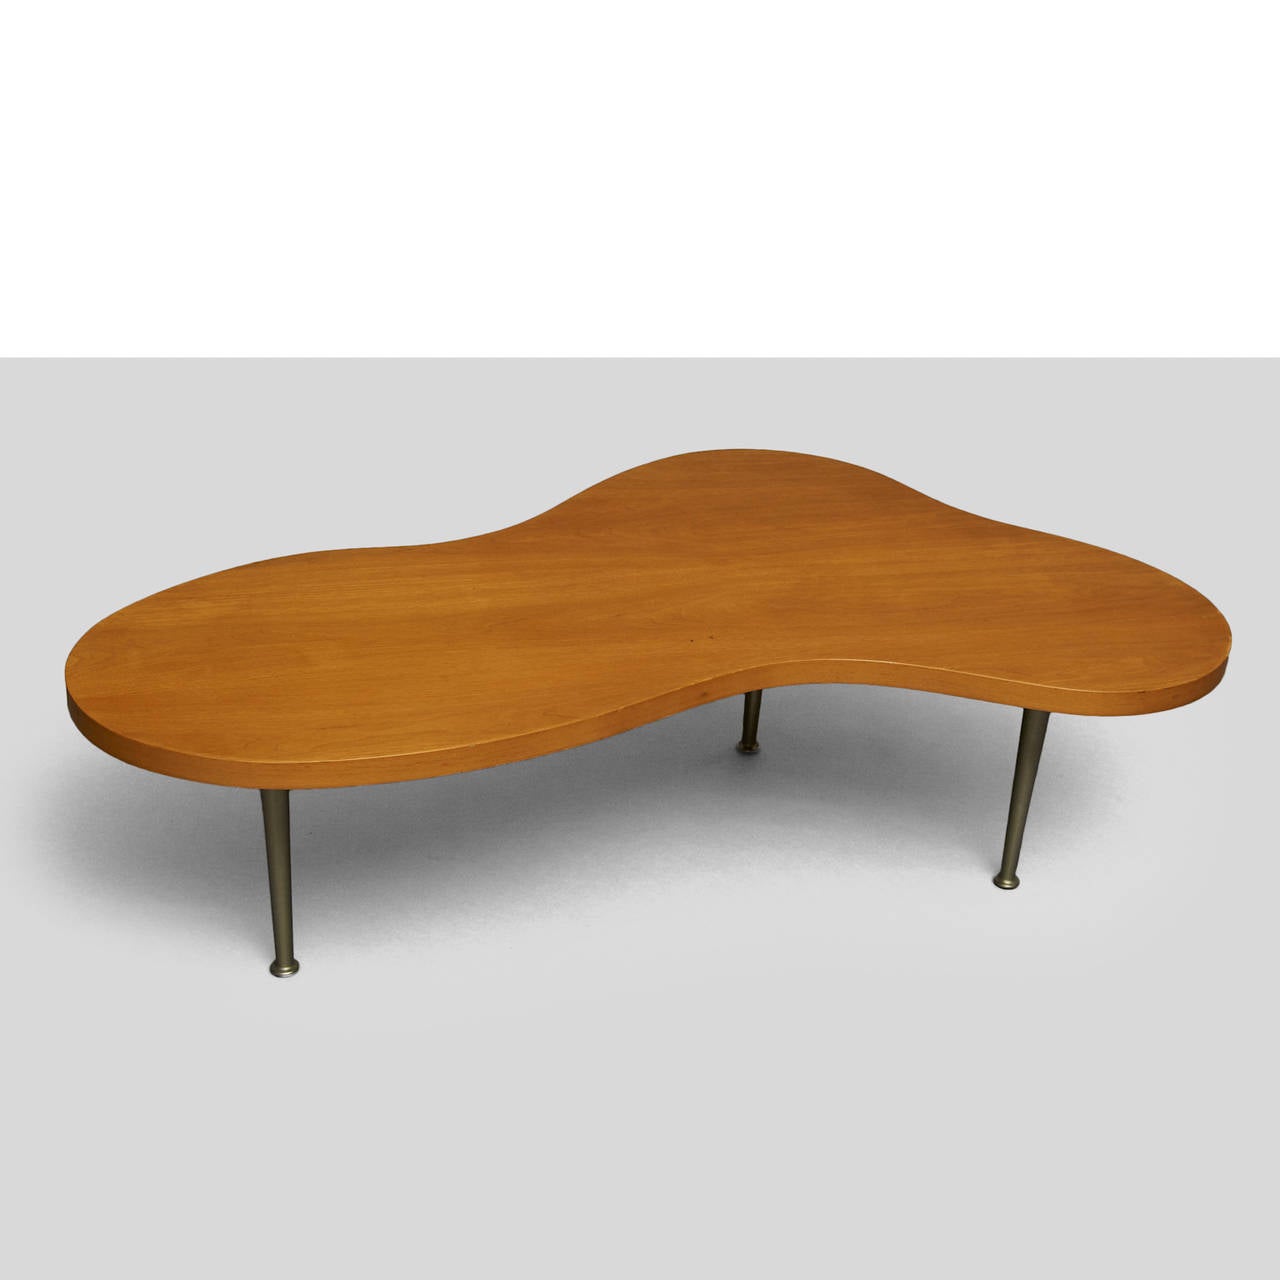 A Biomorphic maple coffee table for Widdicomb Furniture. Maple top
and aluminum legs. Retains the original Widdicomb Label.